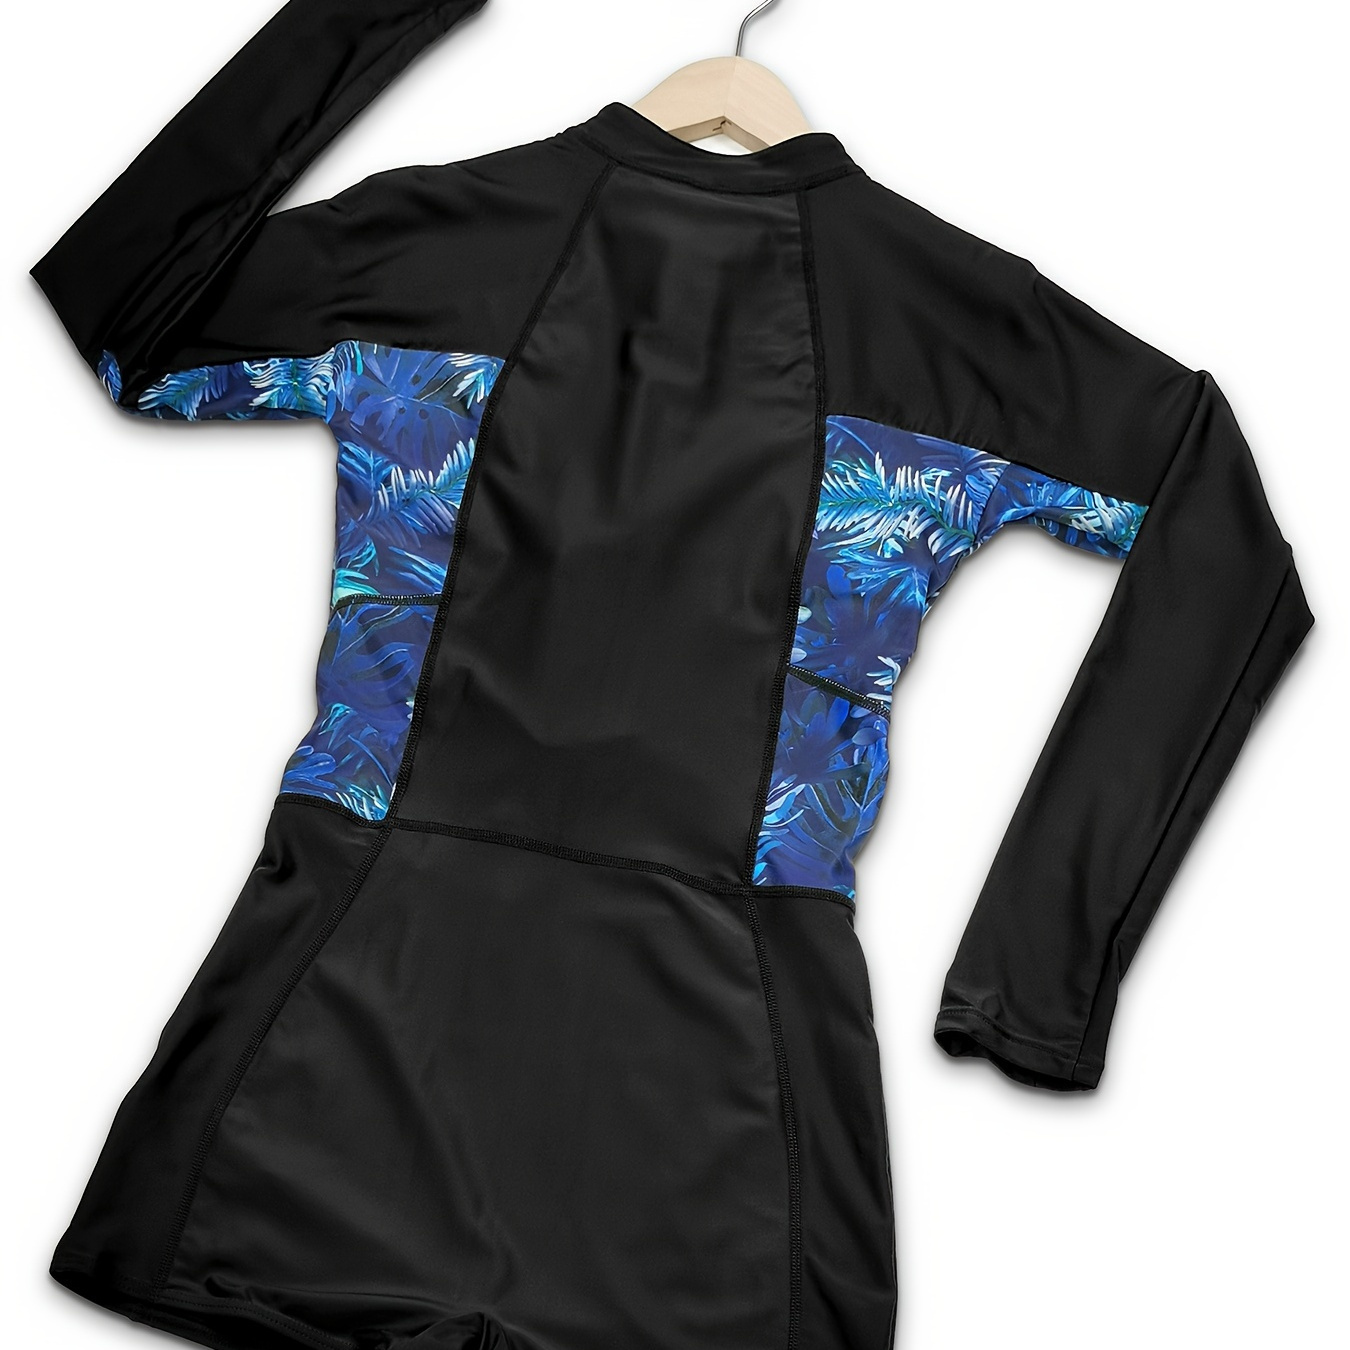 

Long Sleeve Zipper 1 Piece Swimsuit, Leaf Print Rash Guard Surfing Suit, Boxer Short Stretchy Round Neck Bathing Suit, Women's Swimwear & Clothing